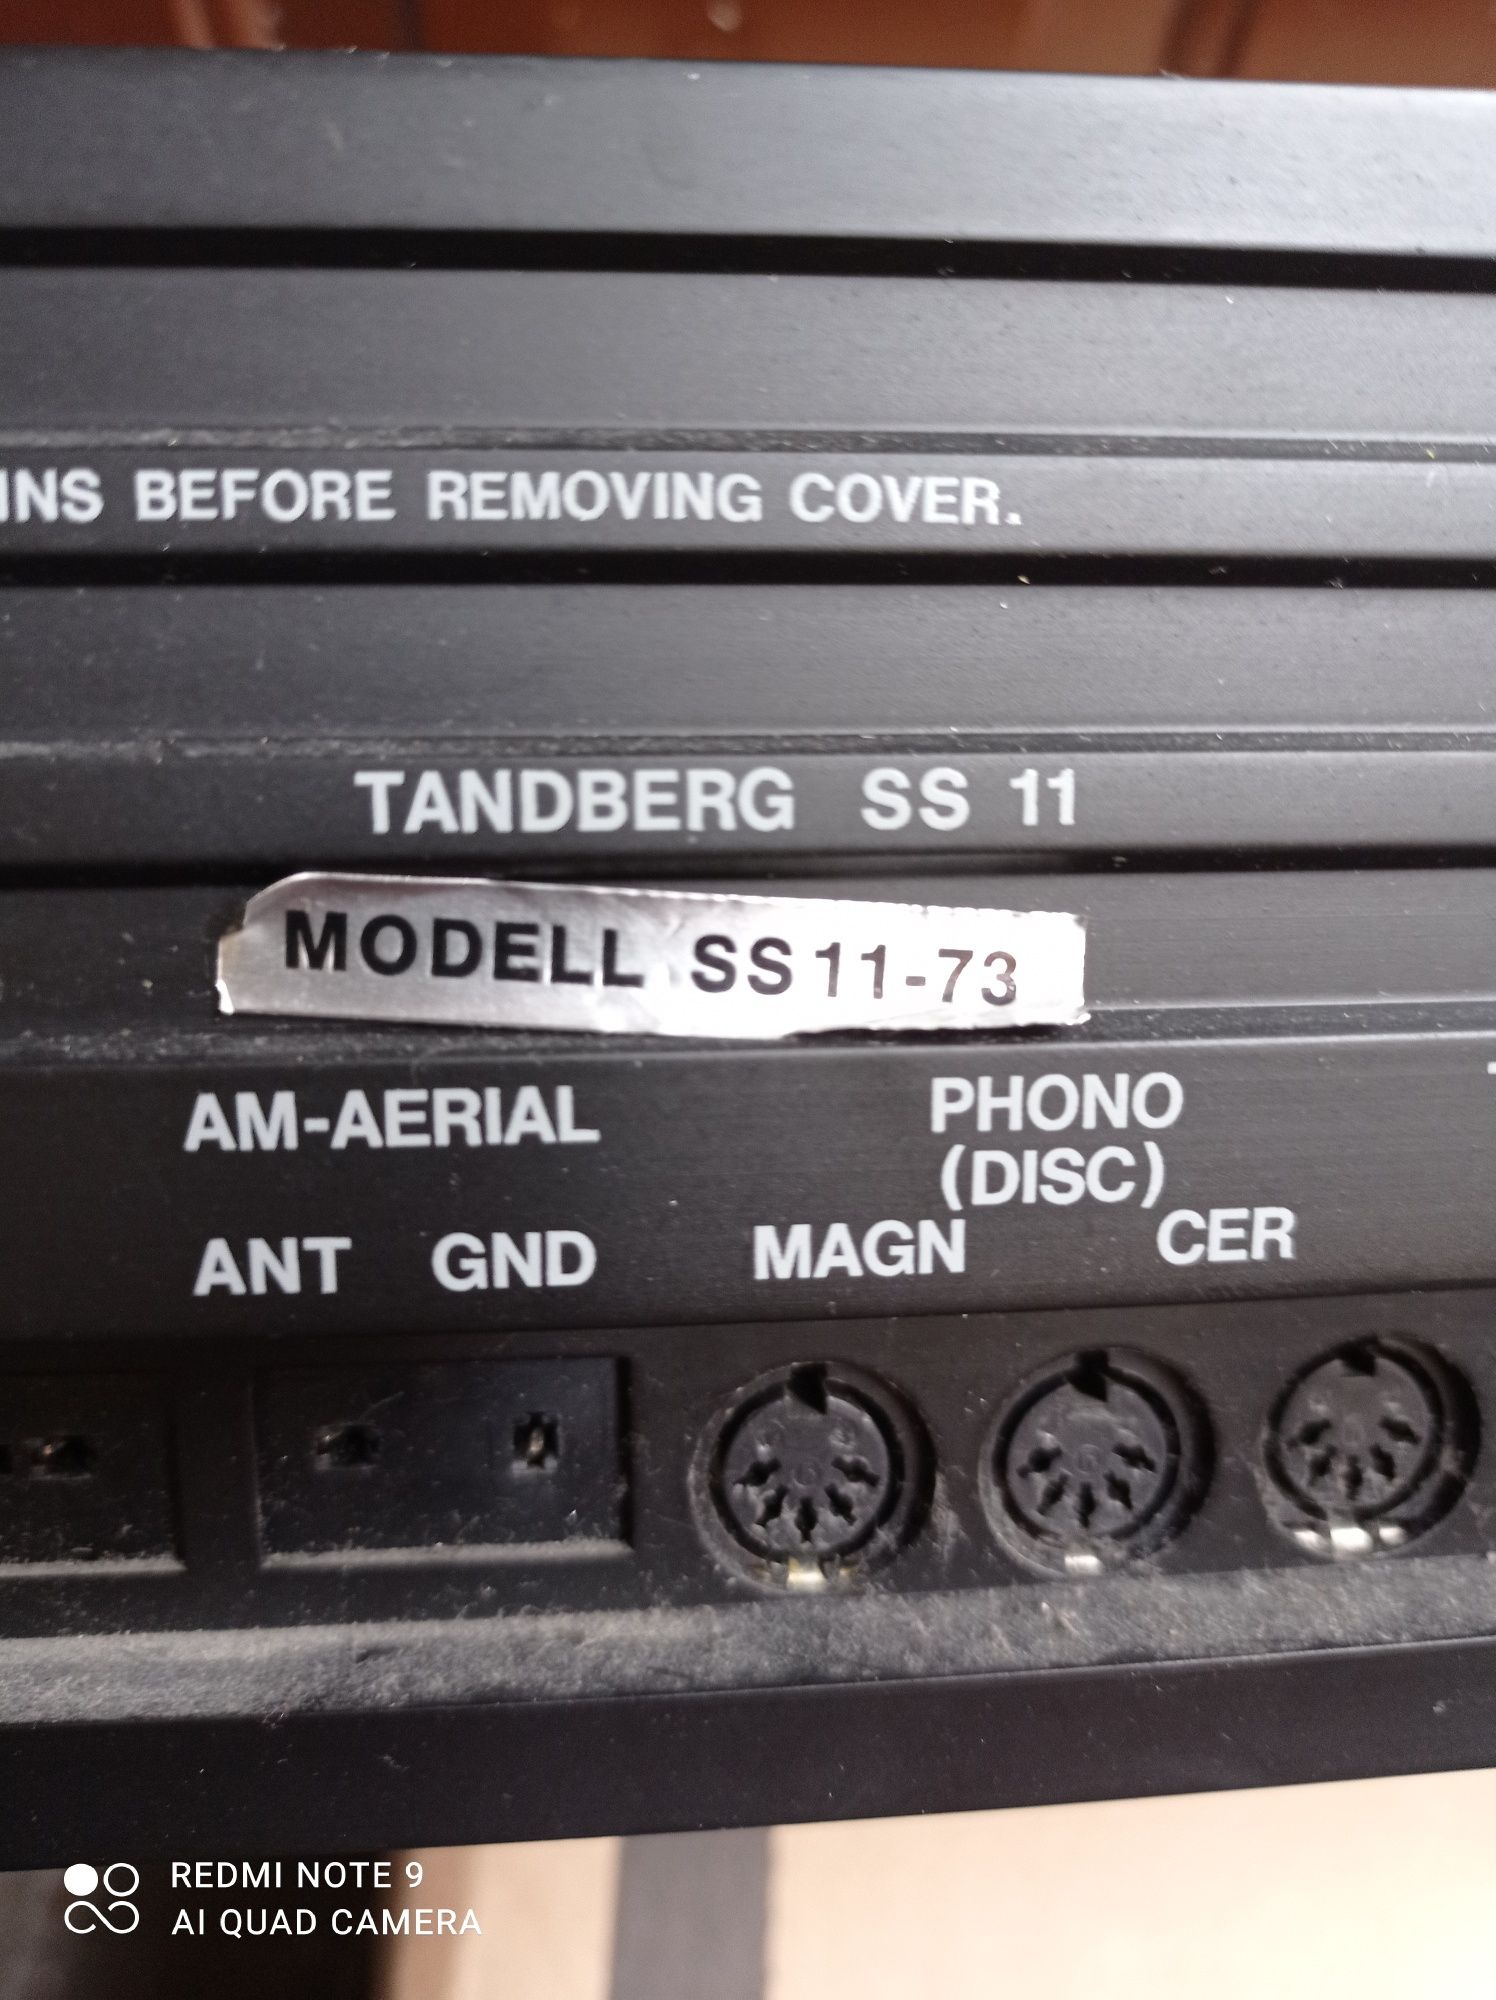 Tandberg Solvsuper 11 stare radio Made in Norway